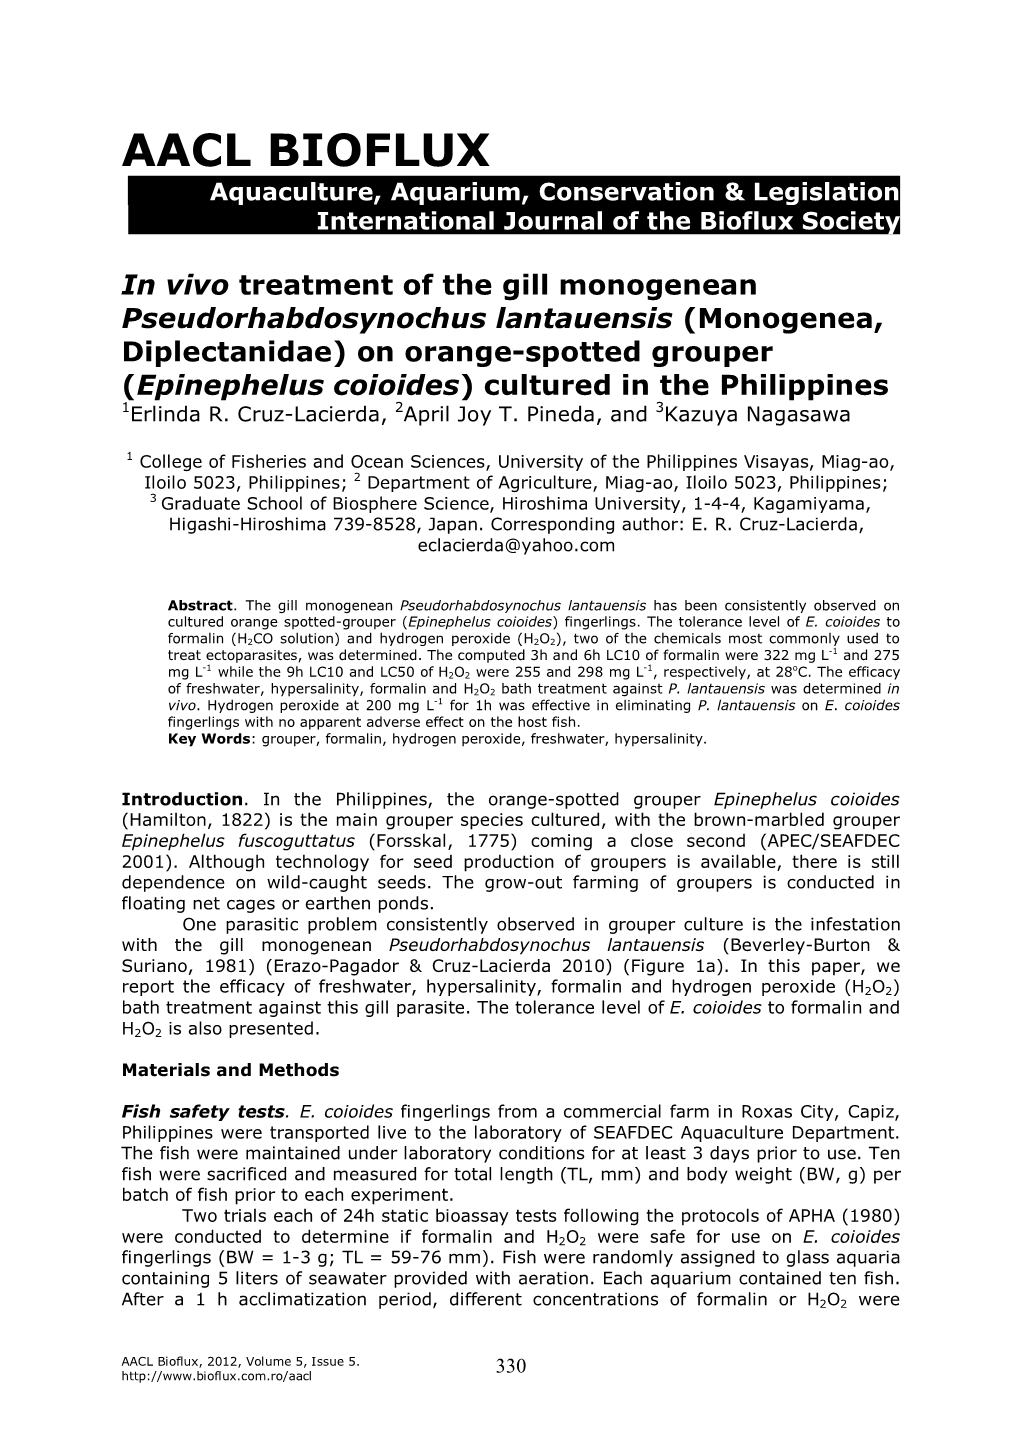 In Vivo Treatment of the Gill Monogenean Pseudorhabdosynochus Lantauensis